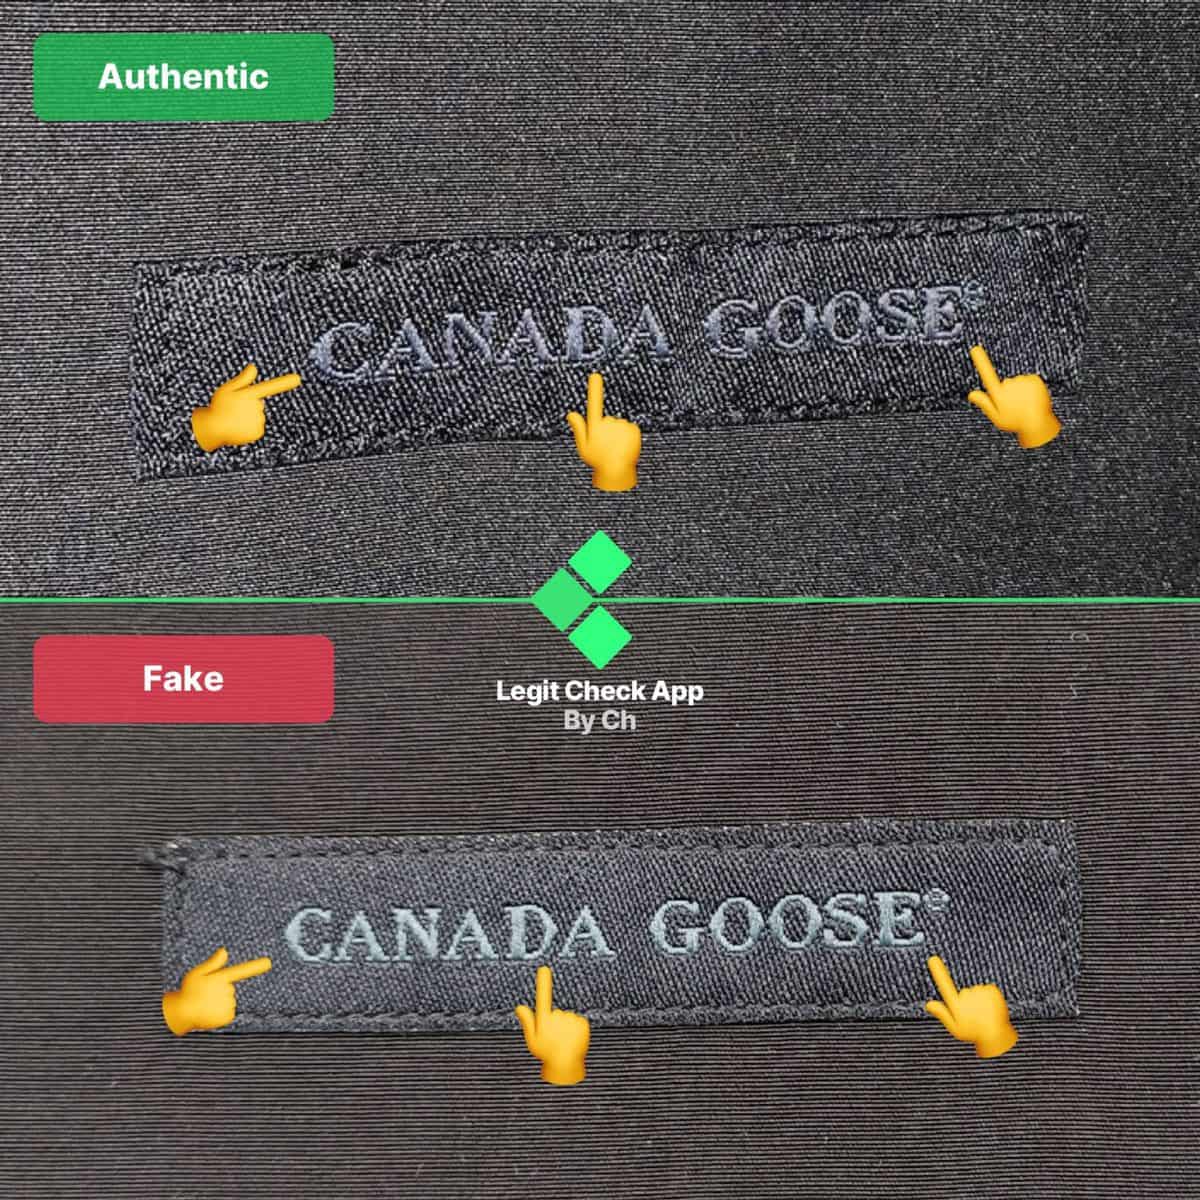 Canada Goose Black Label: Authentic Vs Fake (Guide)